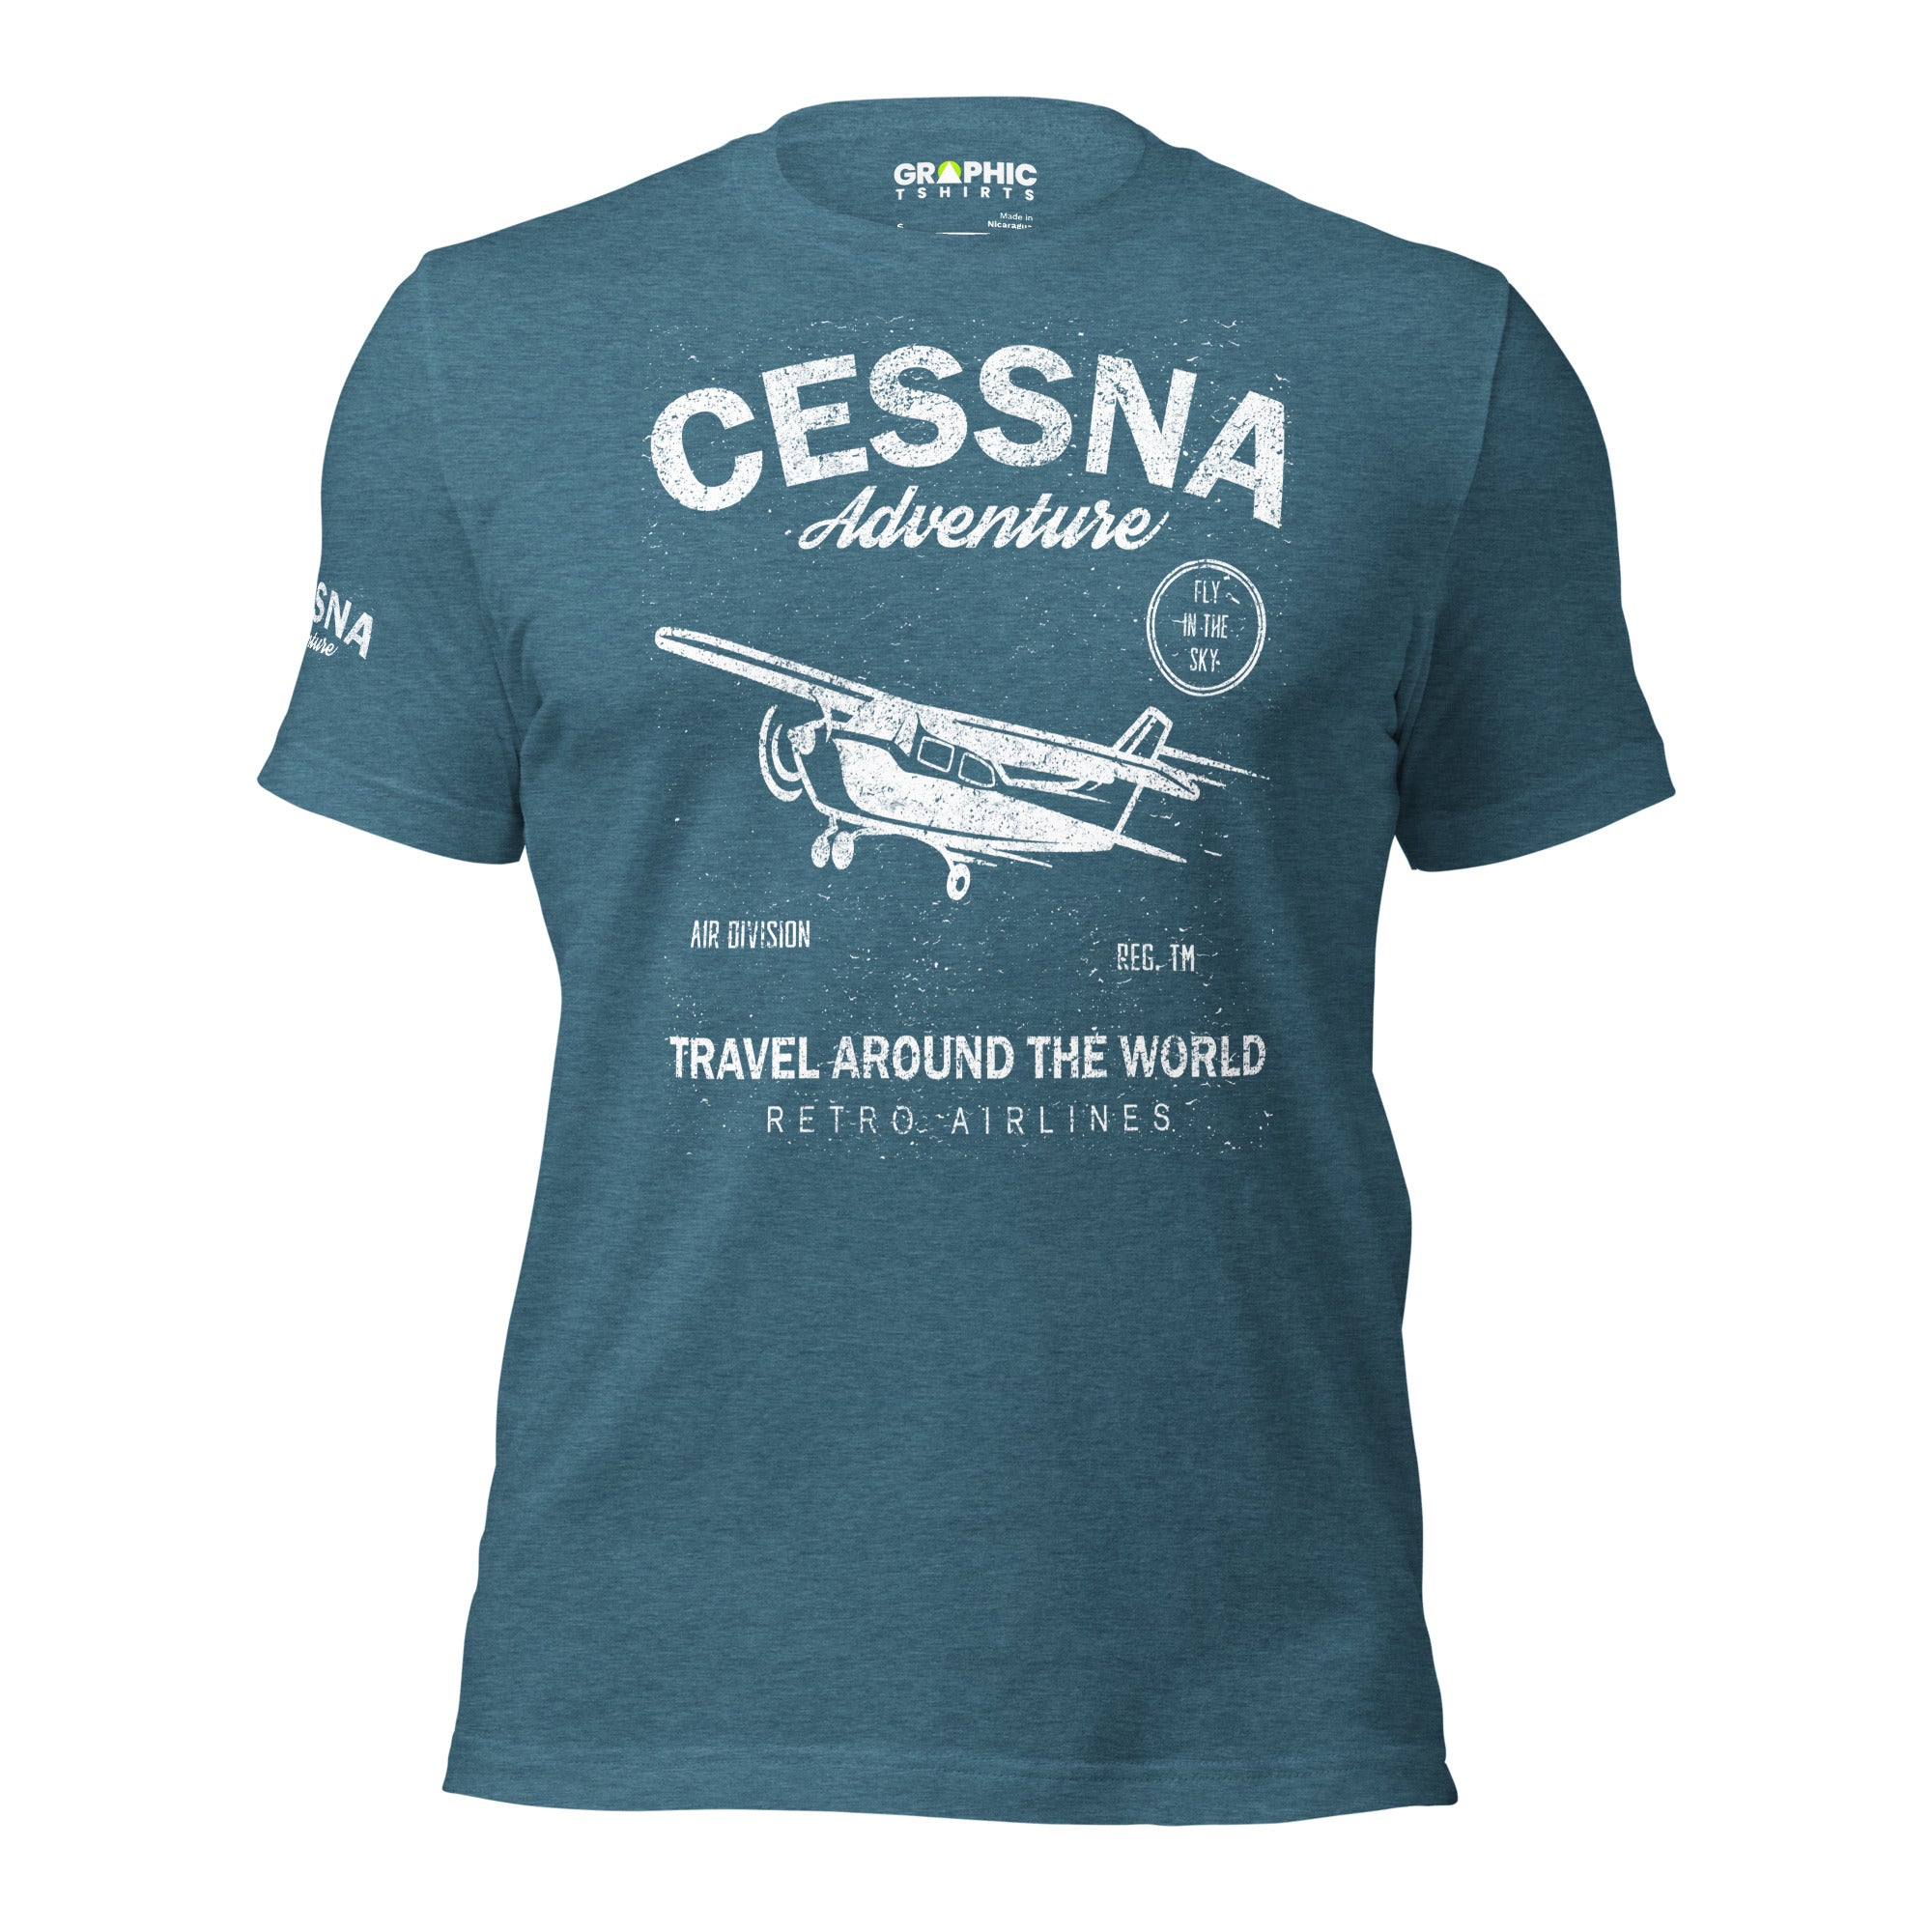 Unisex Staple T-Shirt - Cessna Adventure Travel Around The World Retro Airlines - GRAPHIC T-SHIRTS